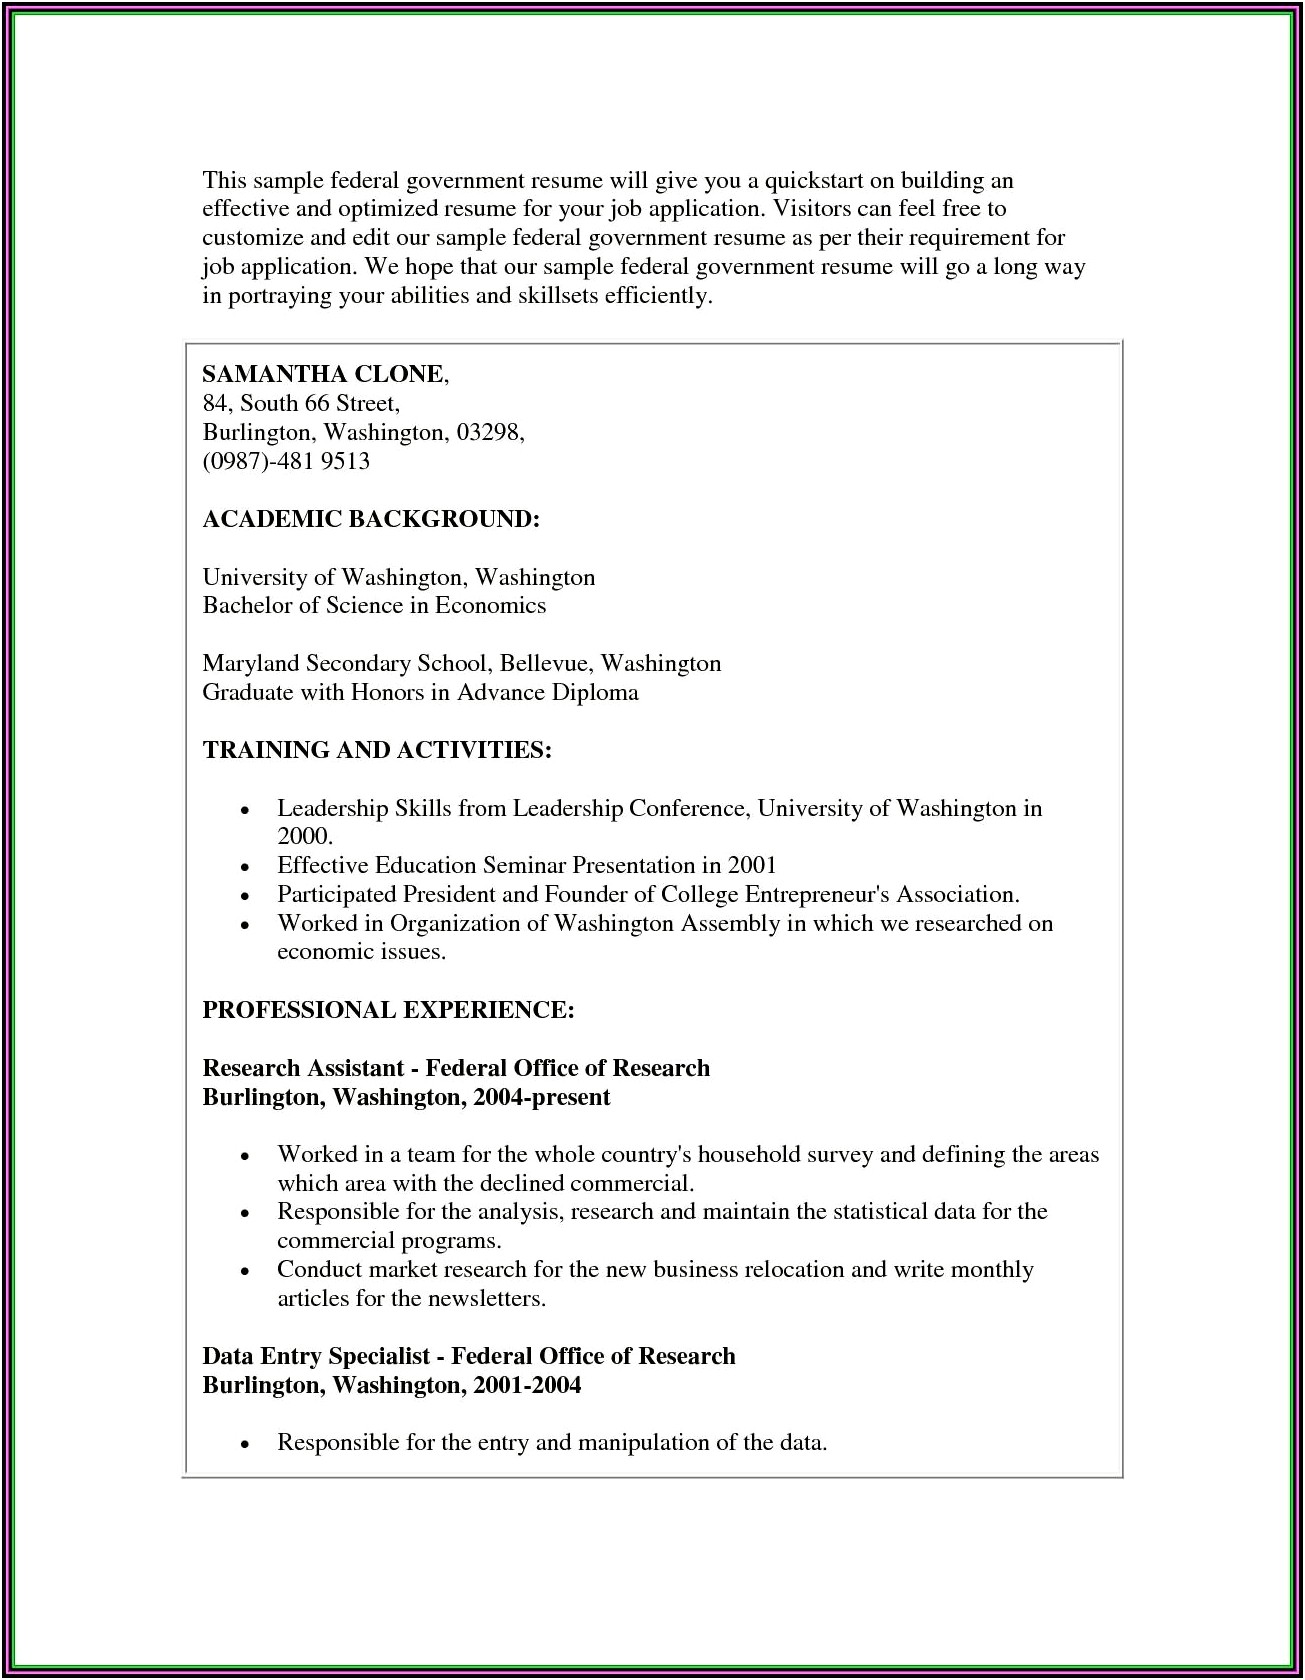 Recent Graduate Federal Resume Sample